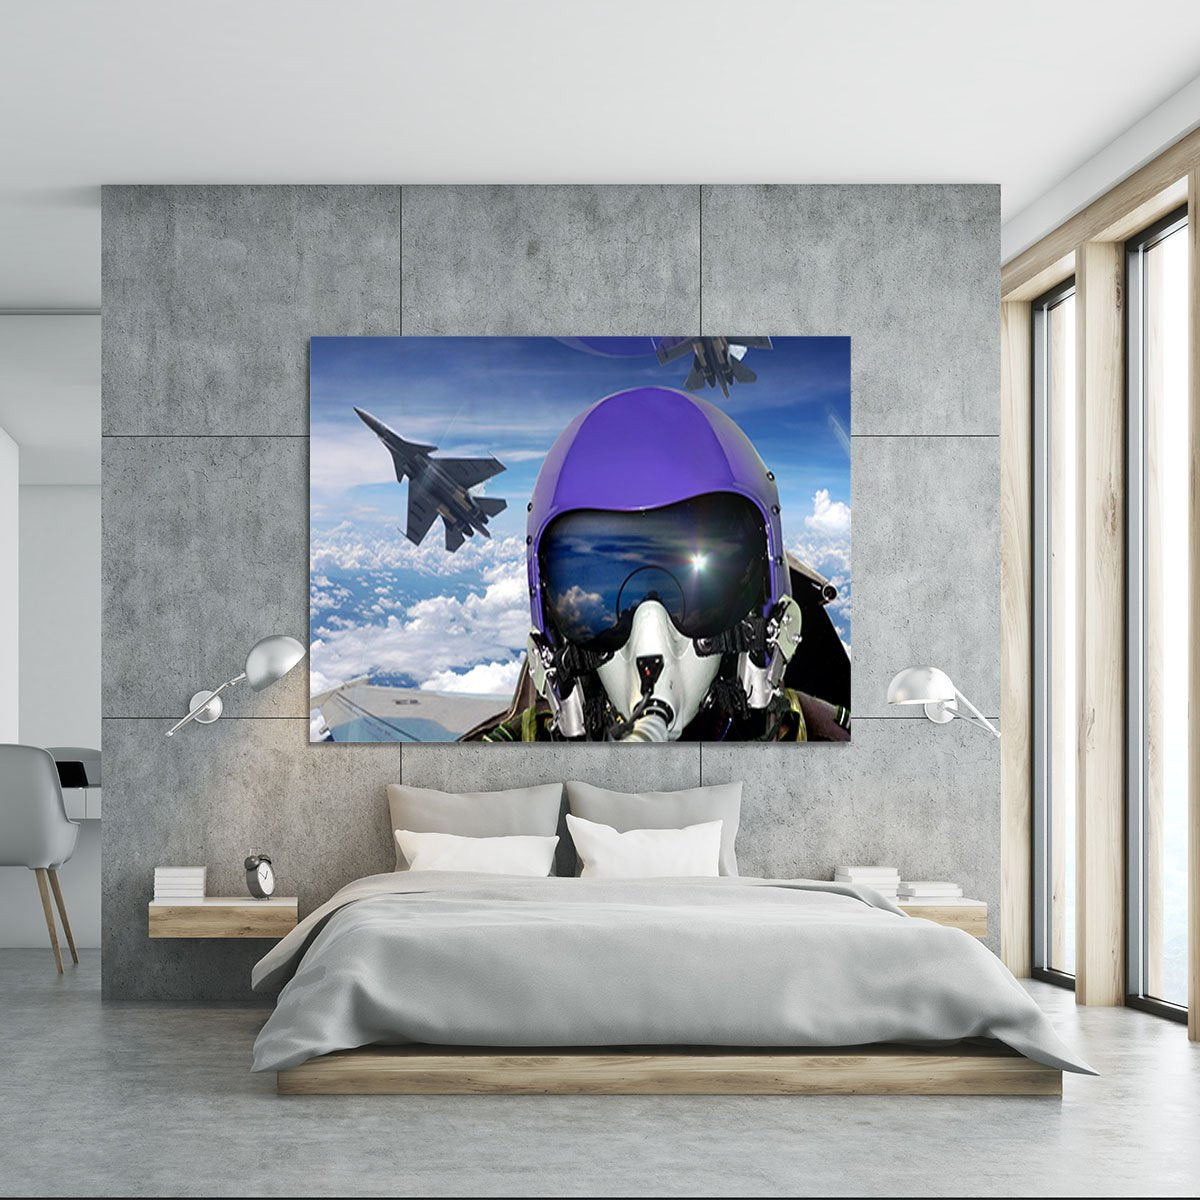 Jet fighter pilot cockpit view Canvas Print or Poster